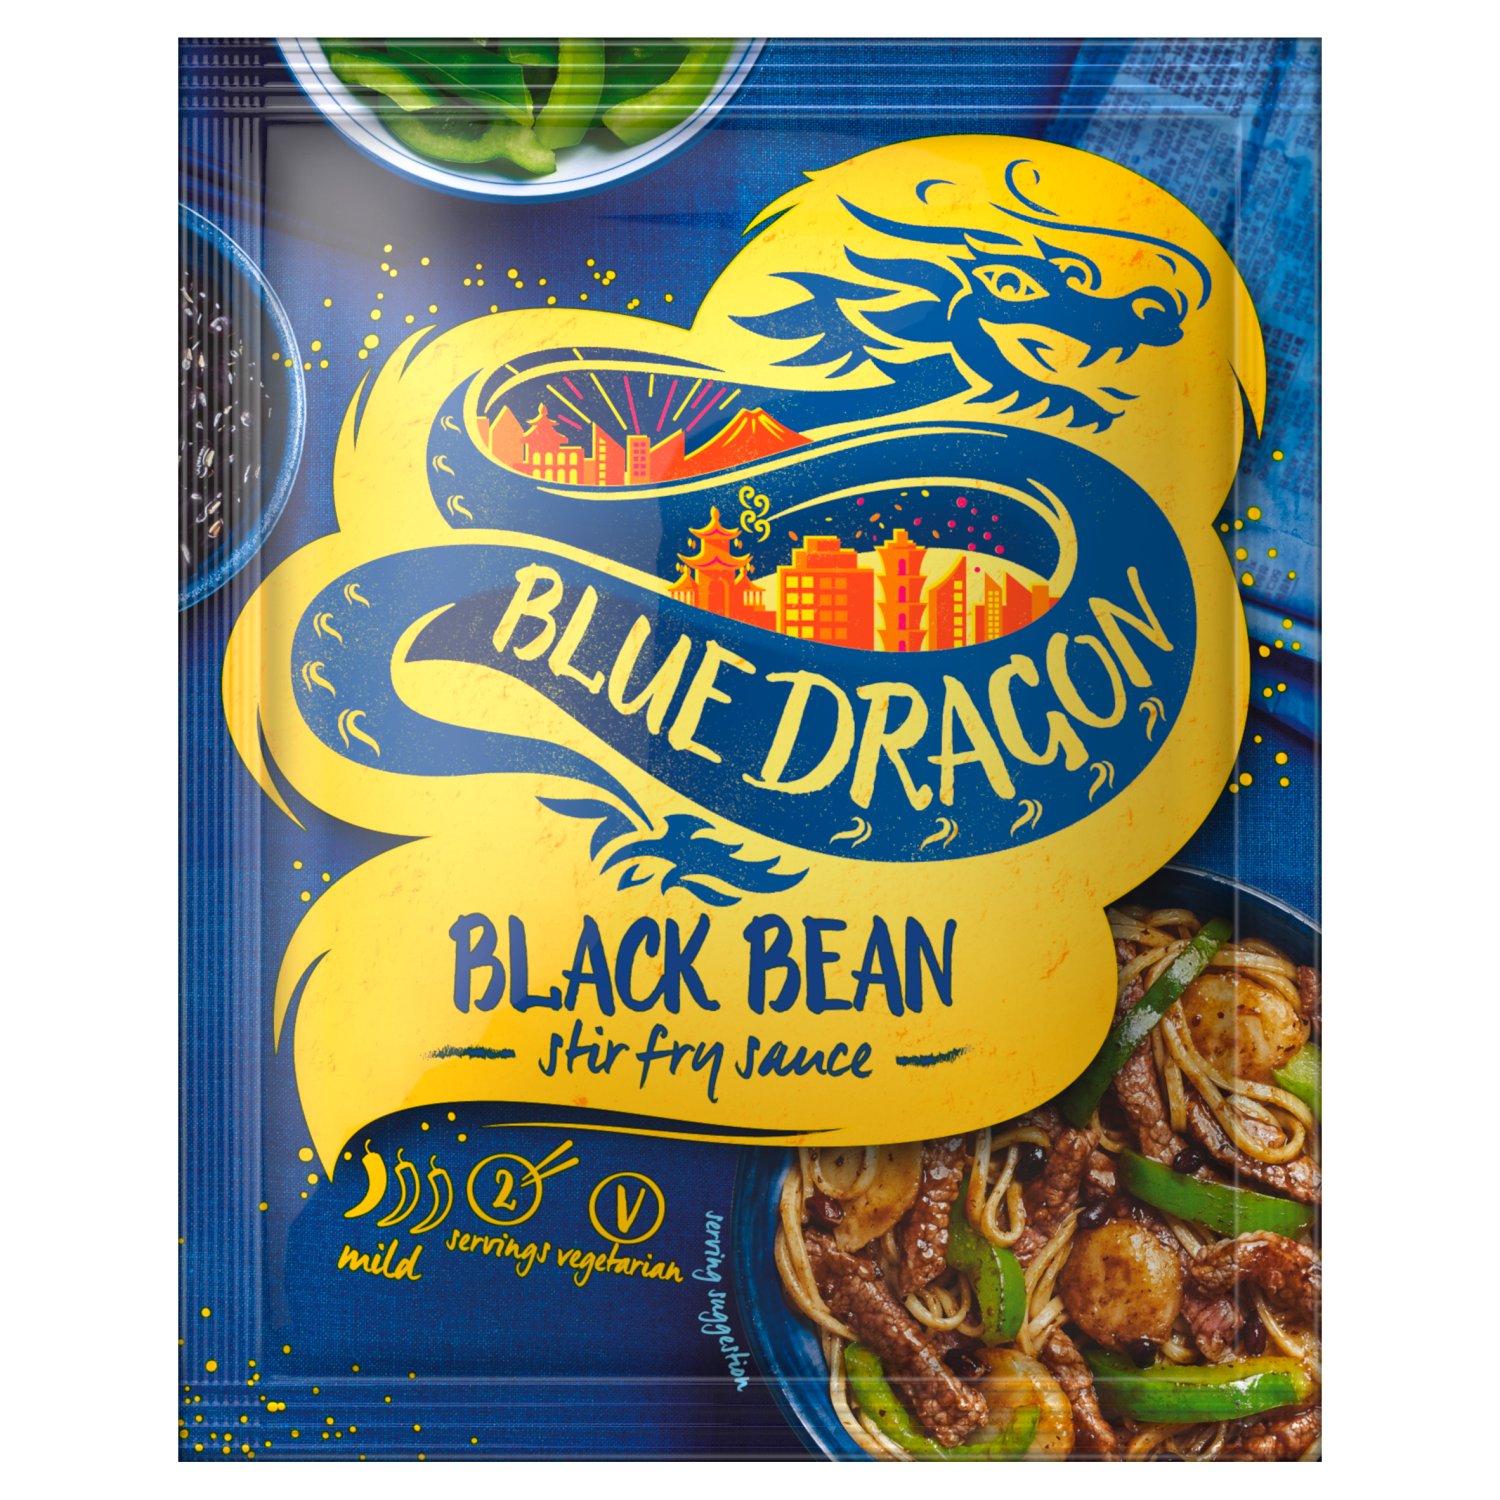 Blue Dragon Black Bean Stir Fry Sauce (120 g)